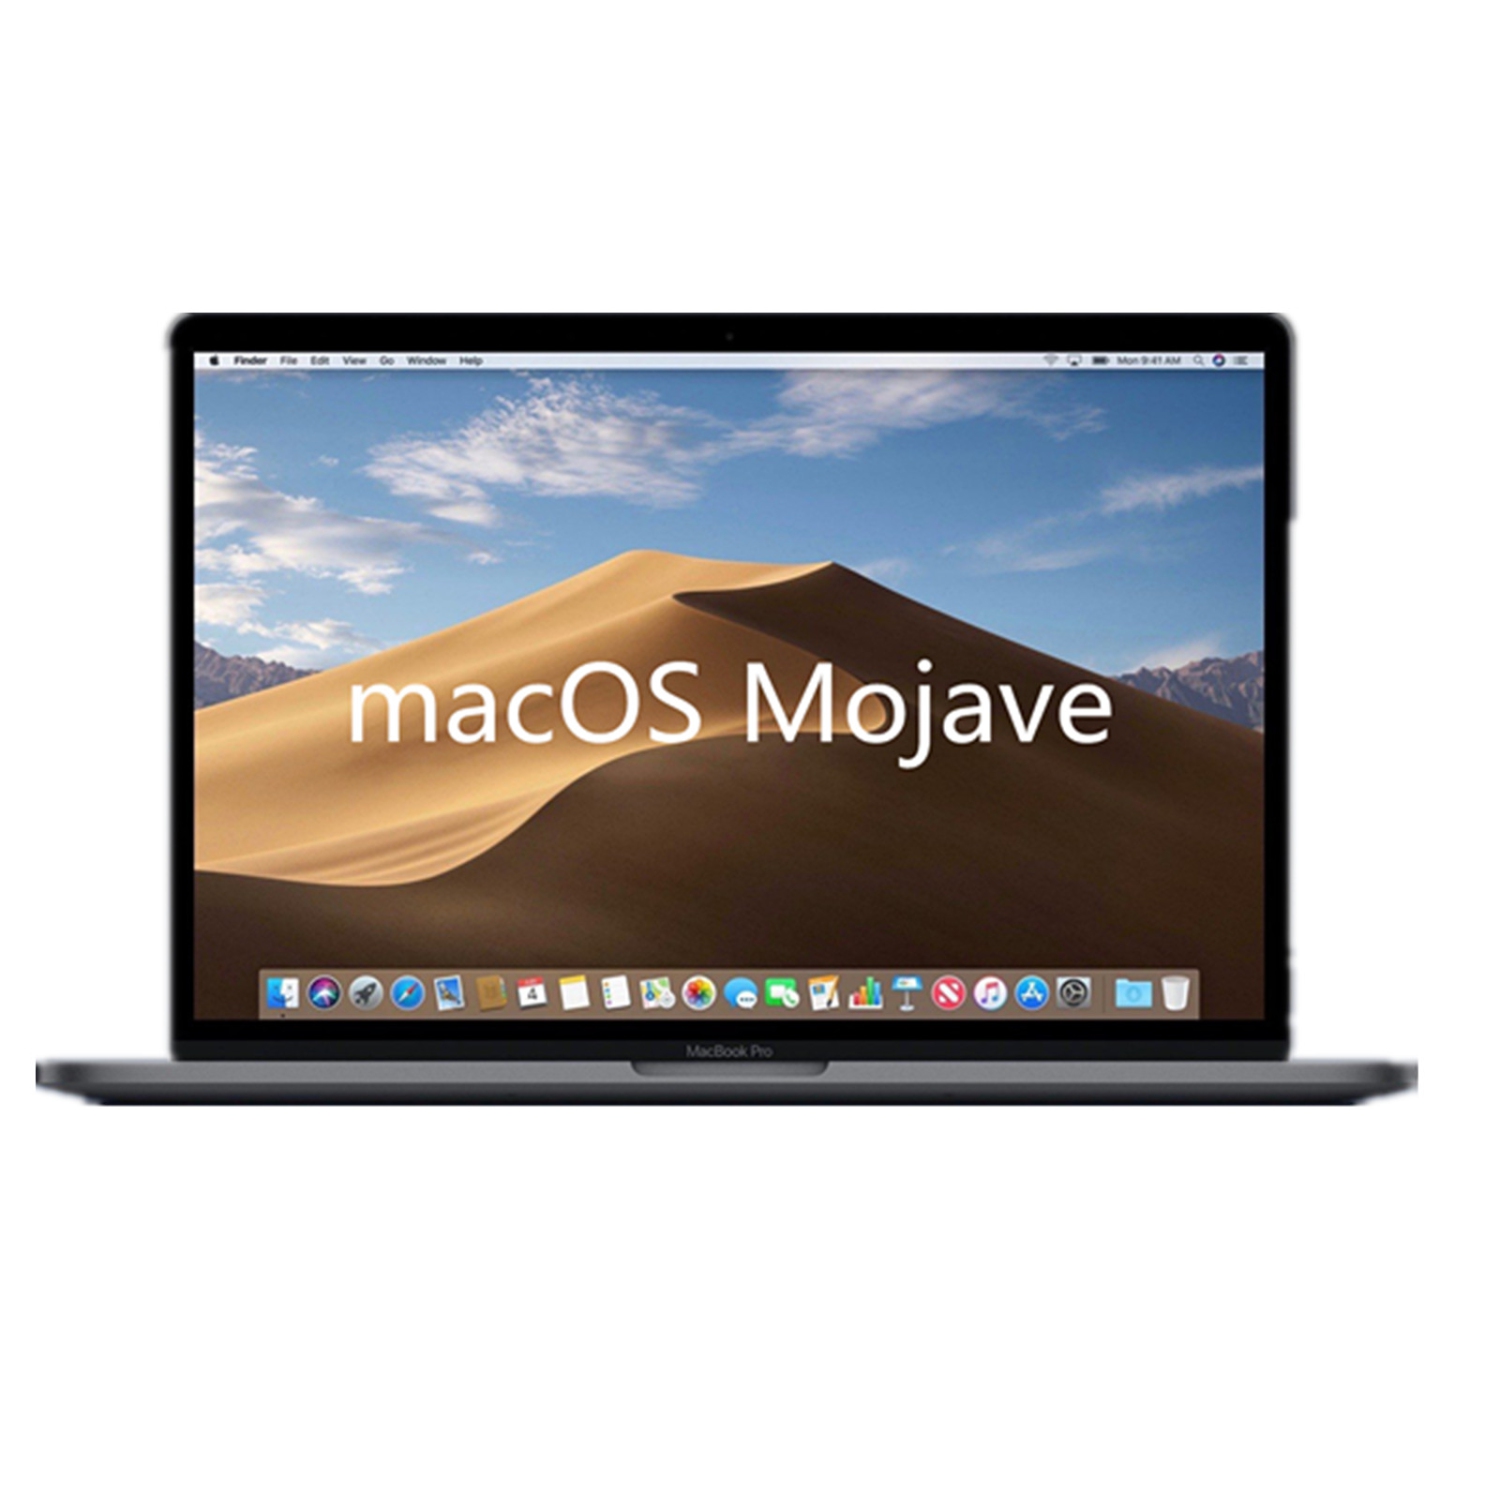 Refurbished (Excellent) - Apple MacBook Pro Retina 13" Intel Core i5 / 8GB RAM / 500GB HDD /512GB SSD - A1502 (2015 Model) - macOS Mojave